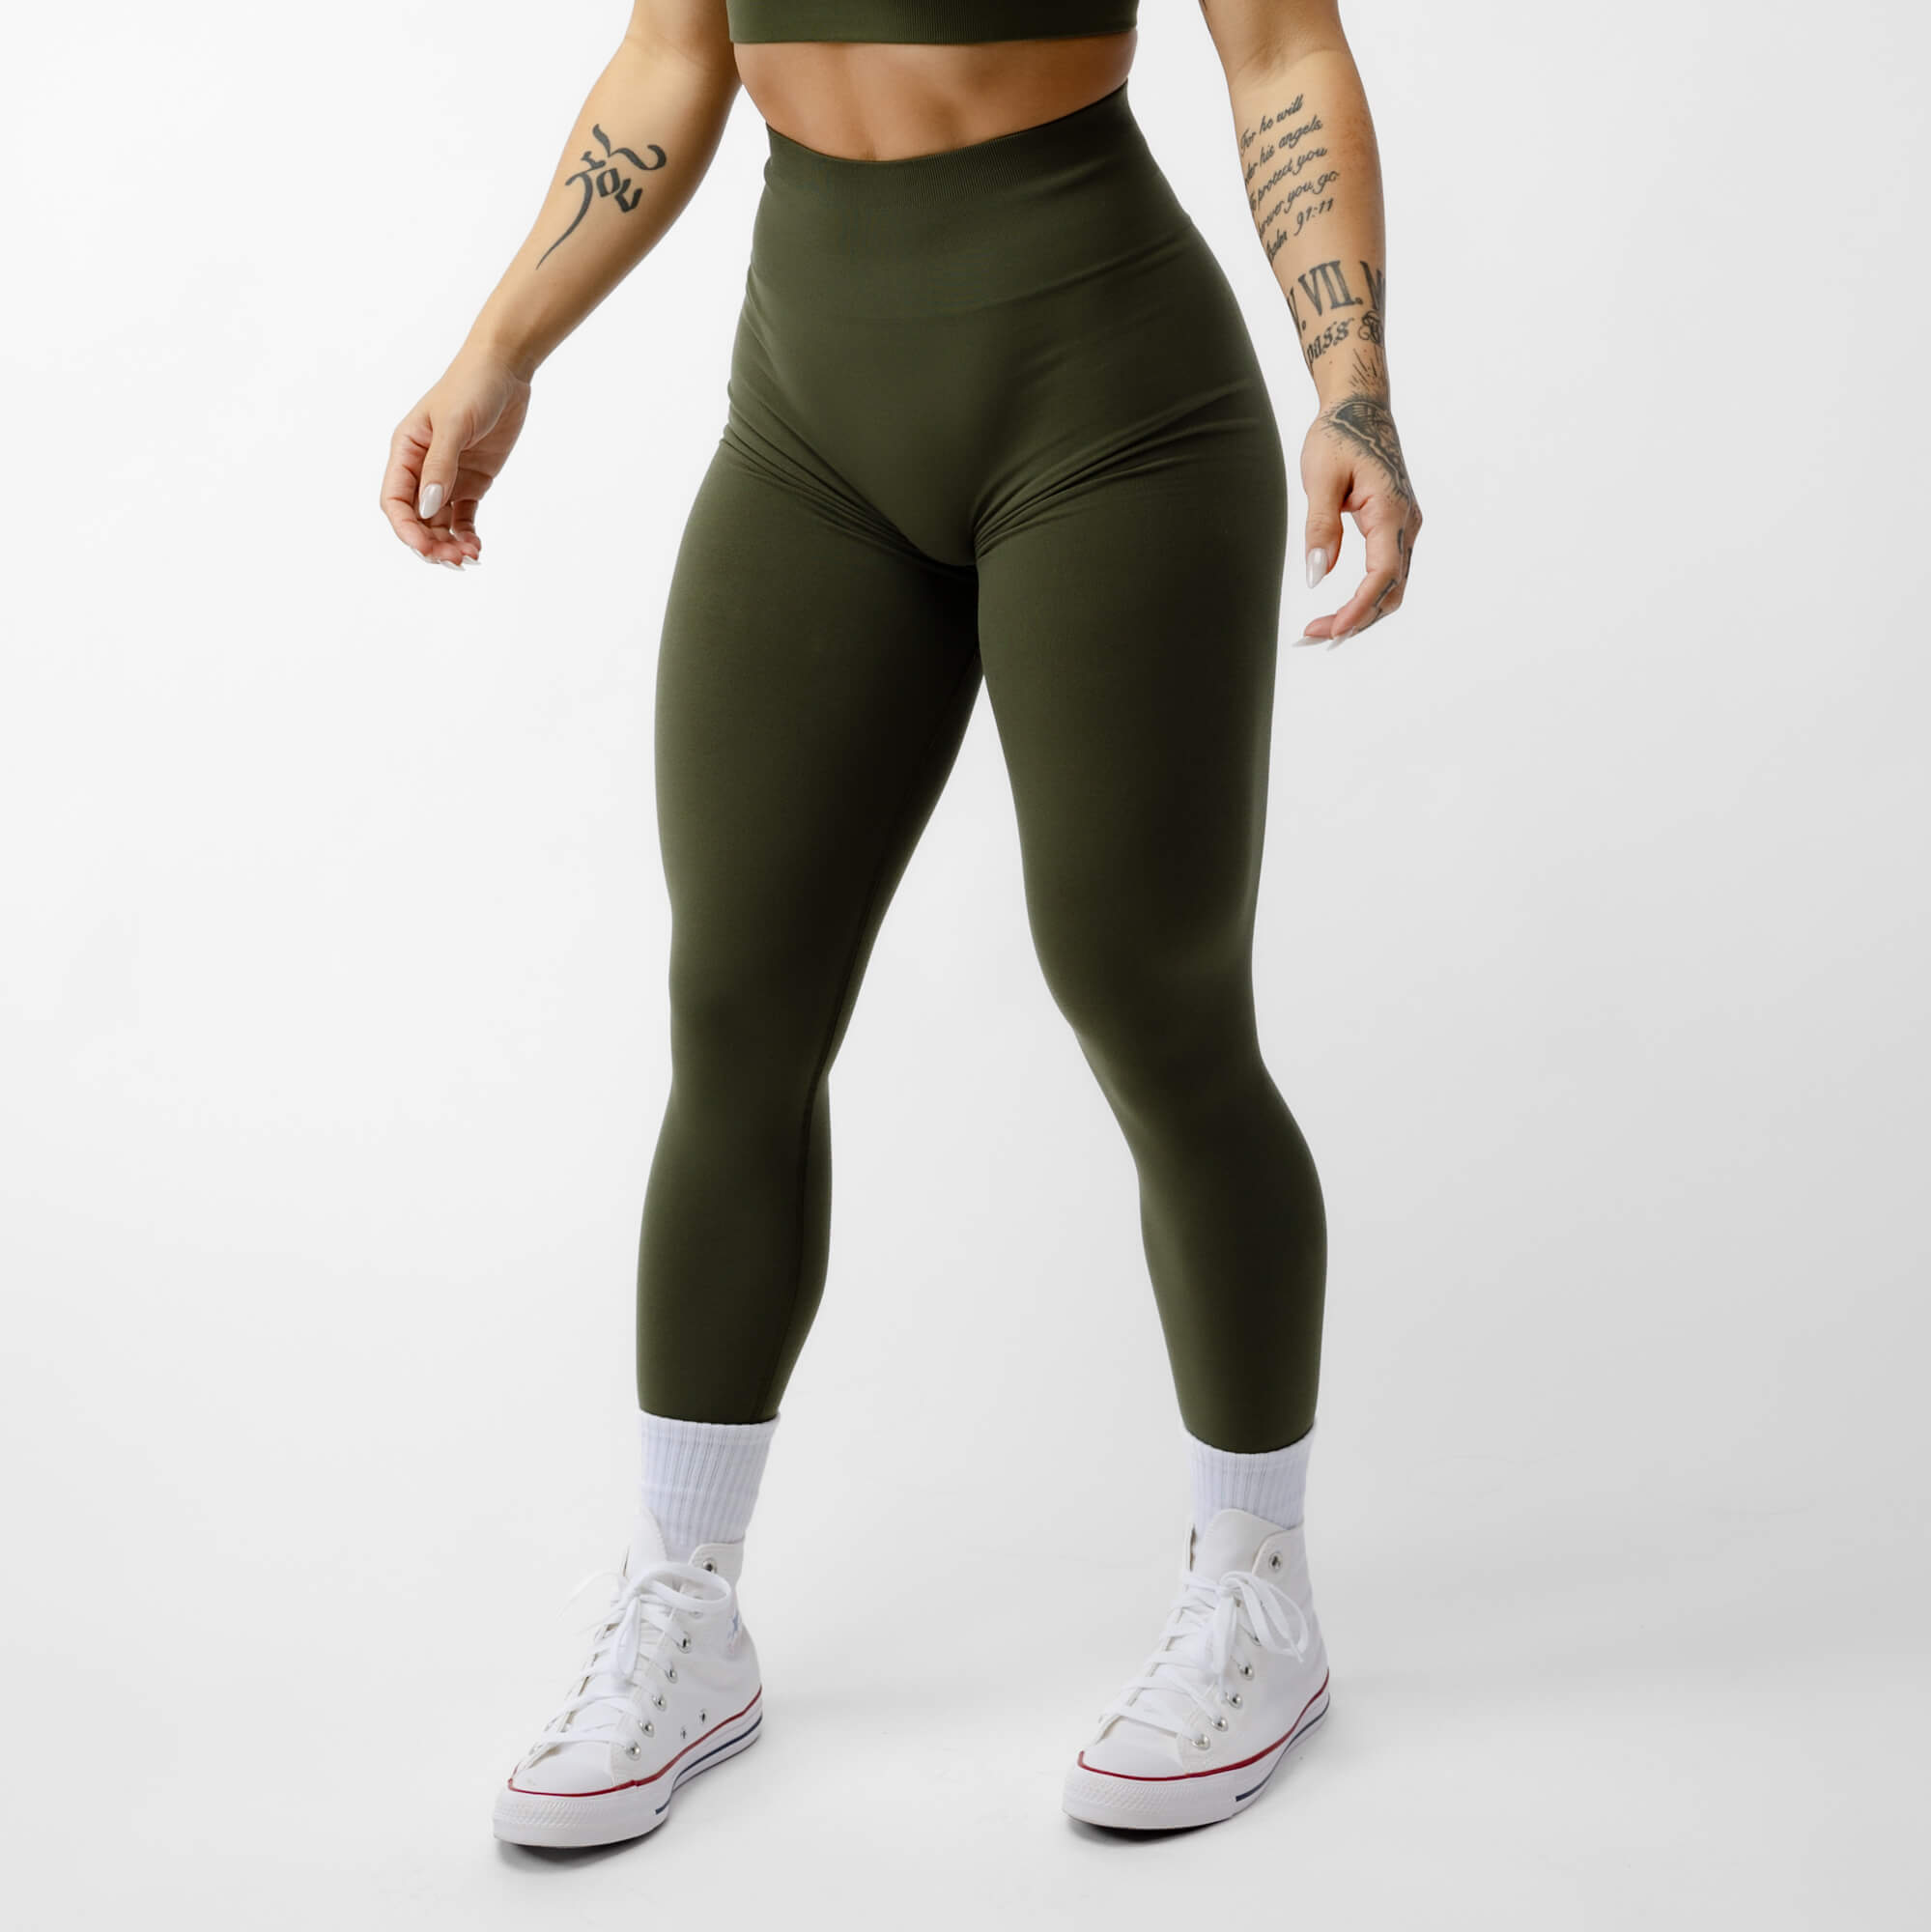 Women's high waisted sports leggings - Deep Taupe